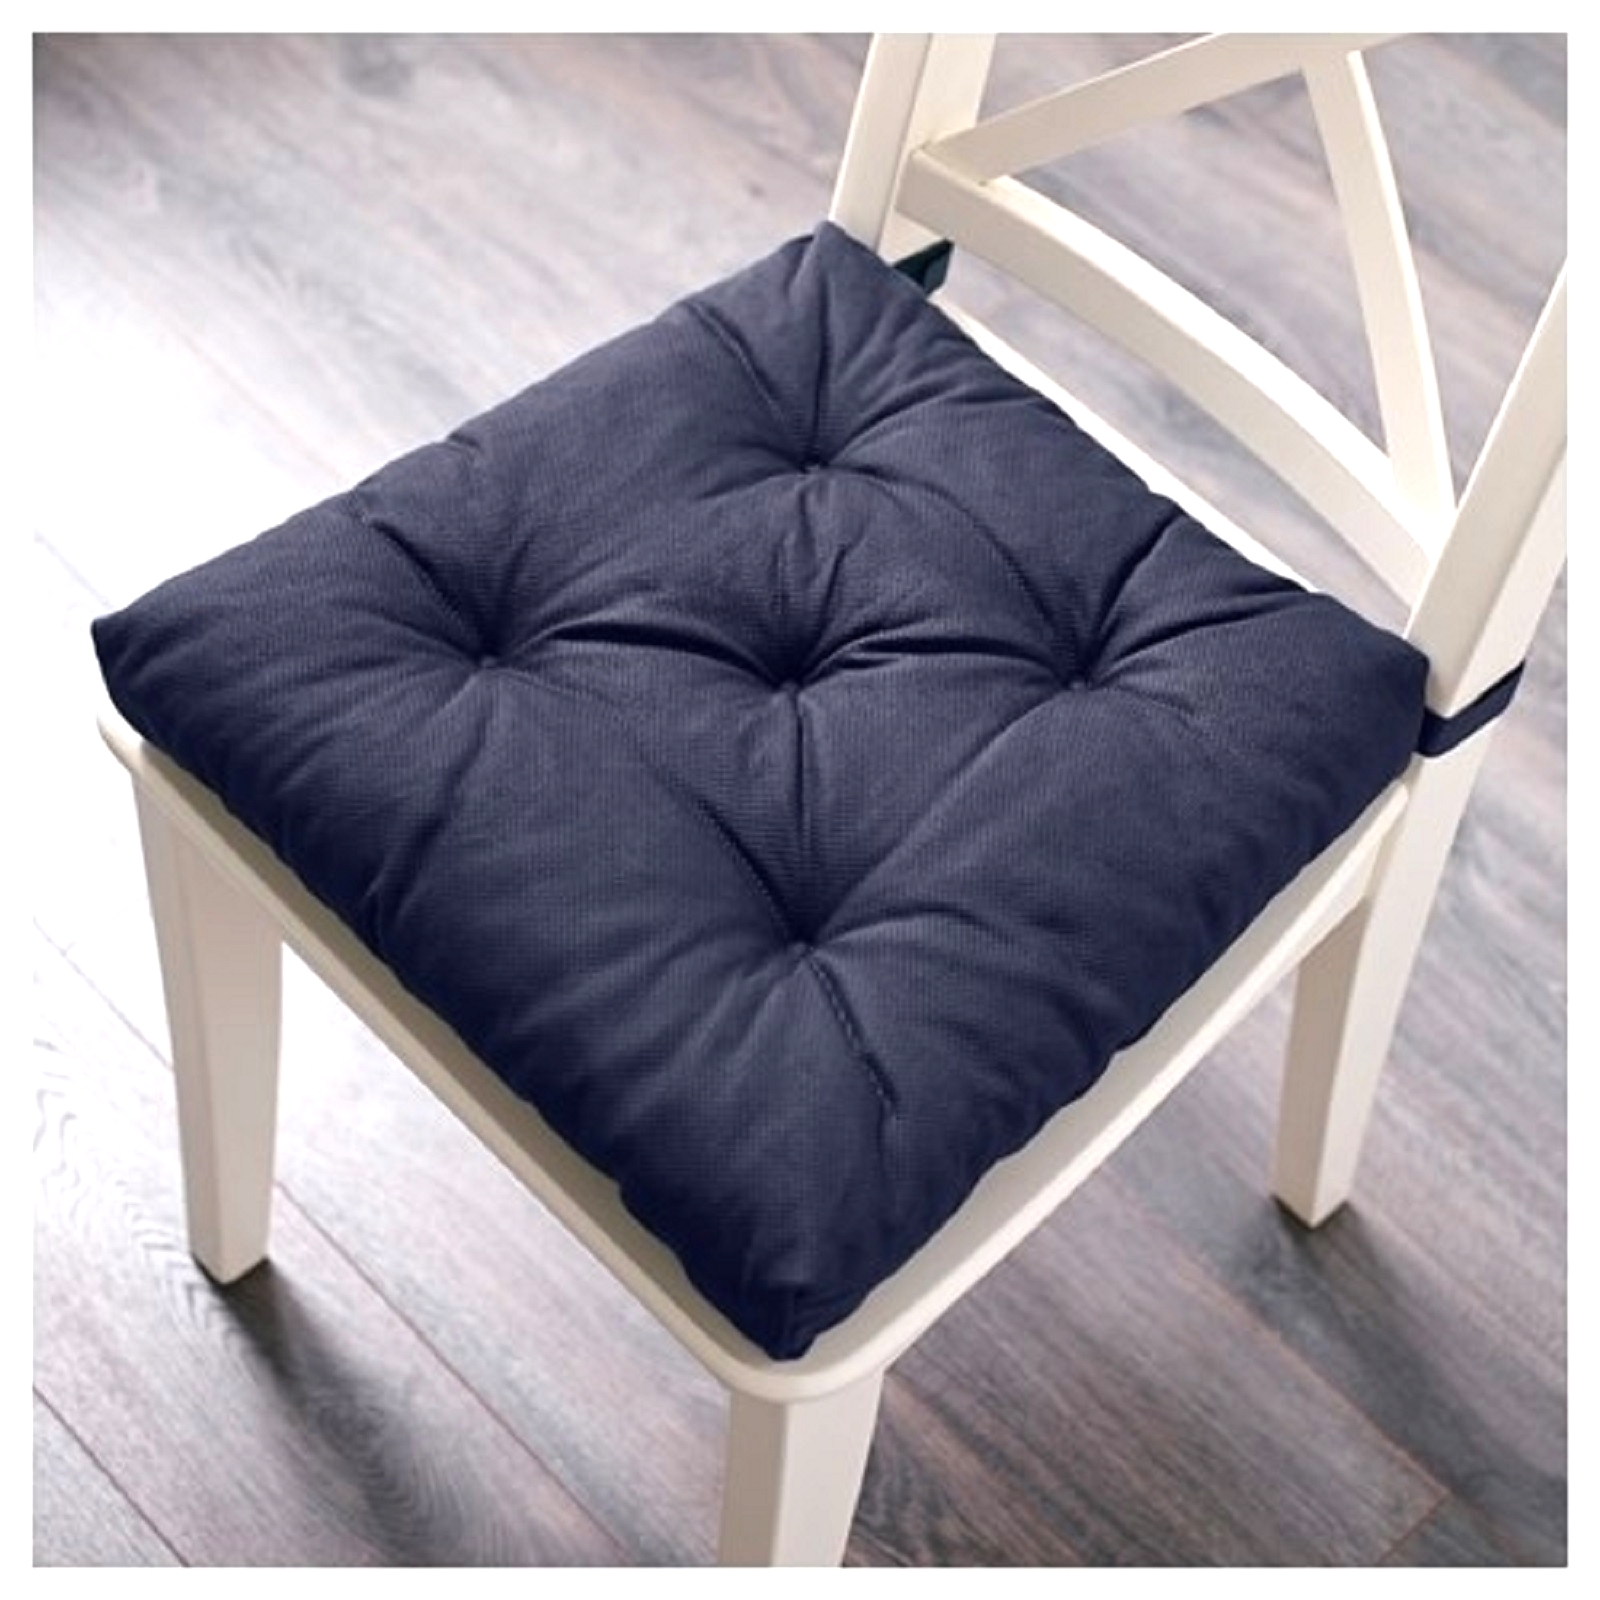 подушка на стул черная